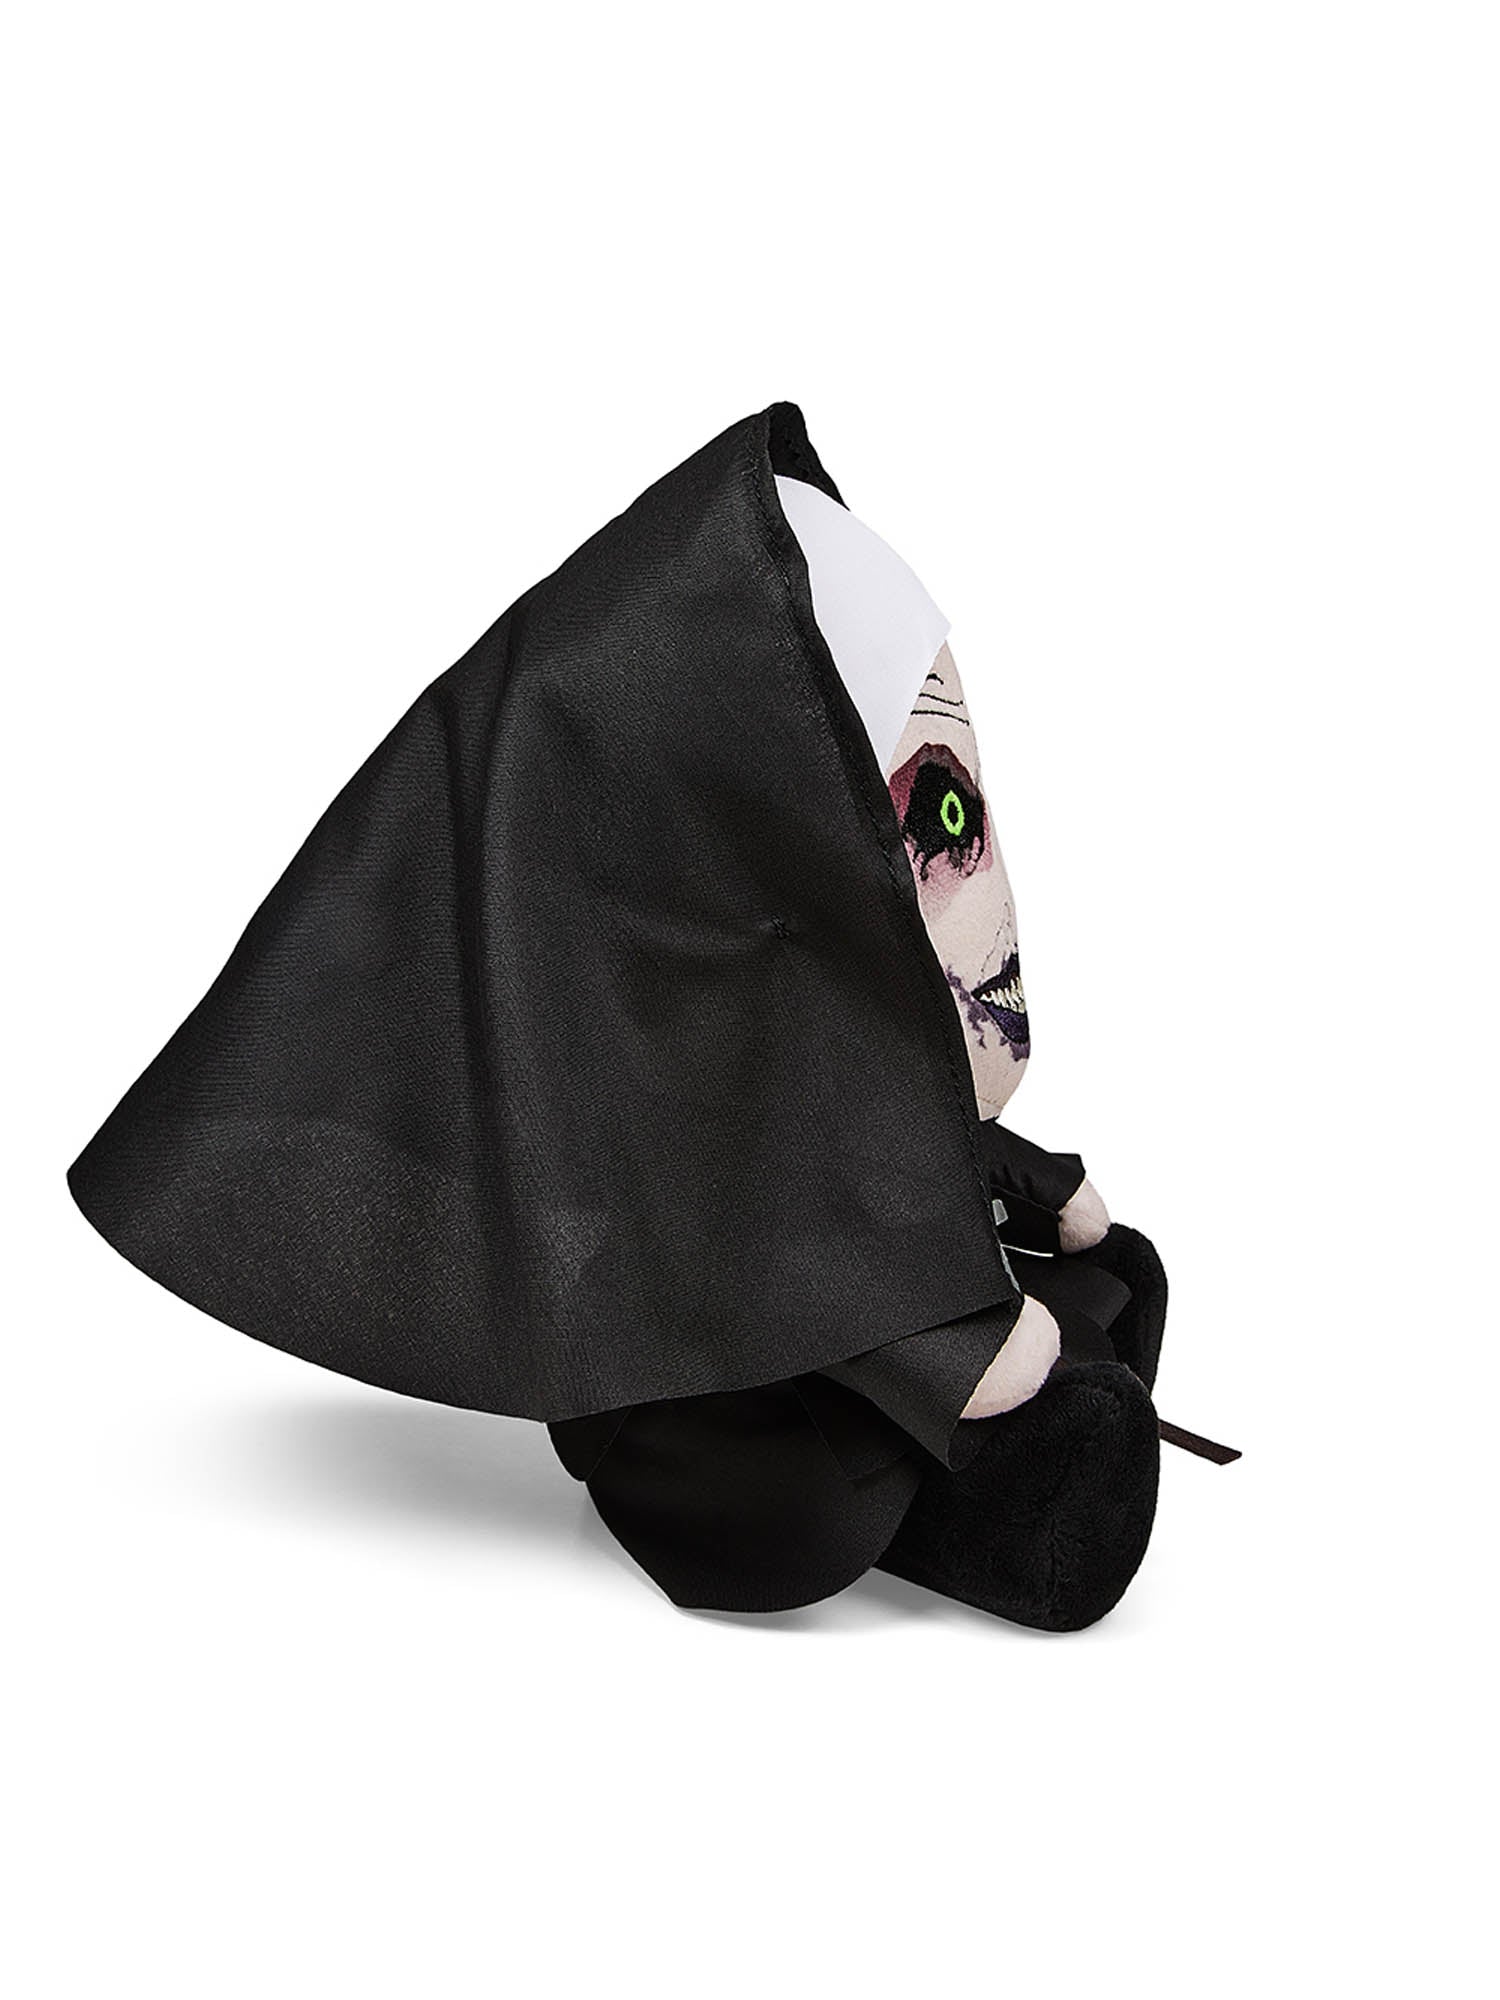 Demon Nun, The Nun, multi-colored, KidRobot, One Size, Side